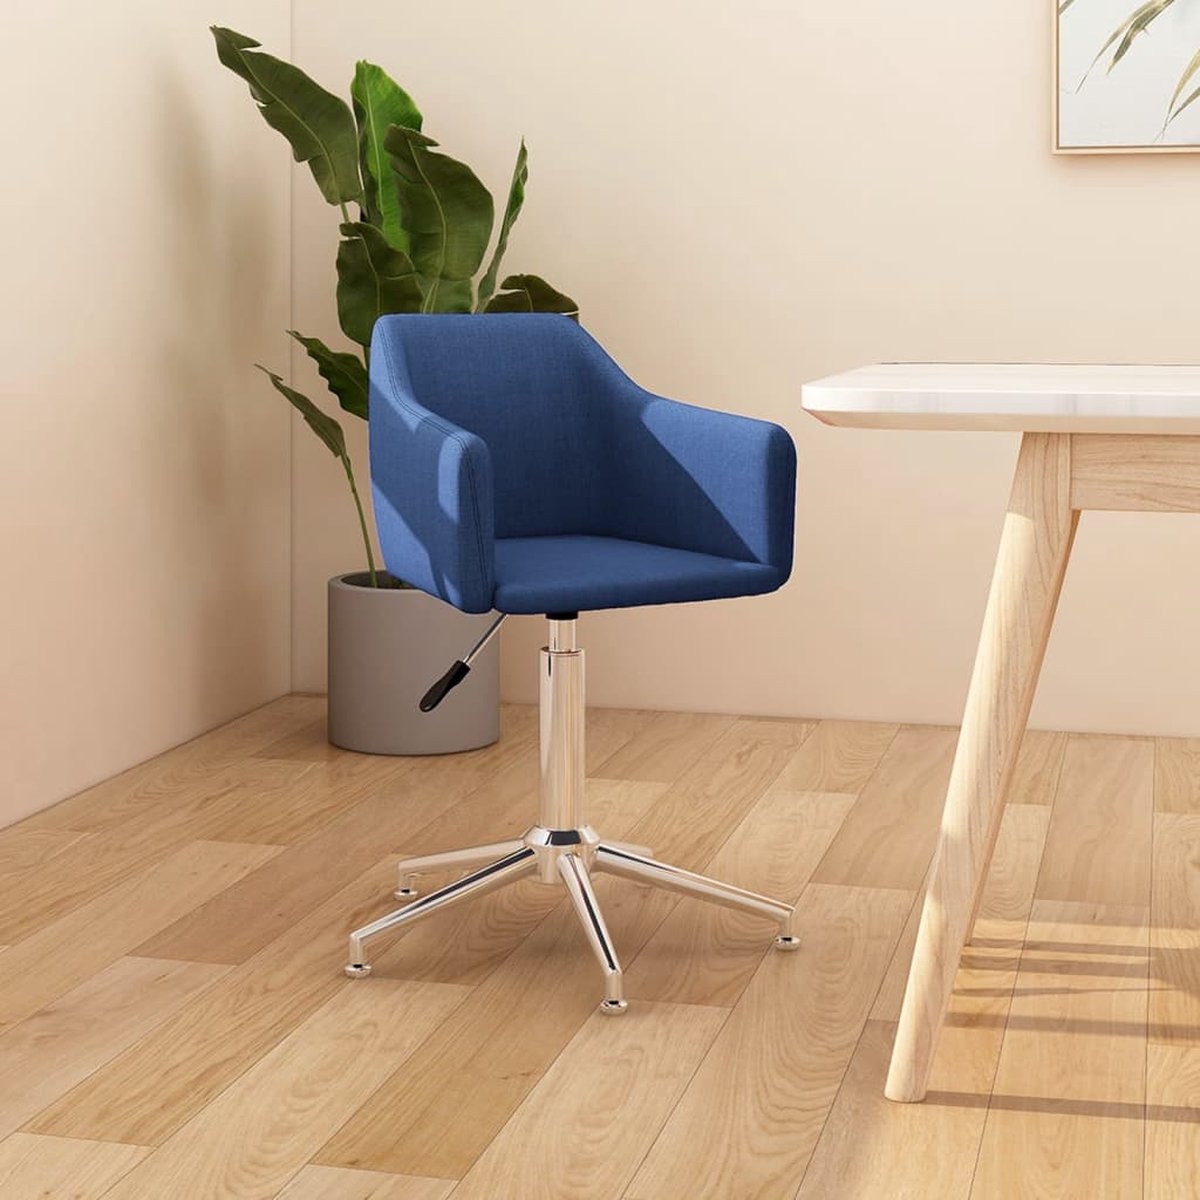 VidaLife Kantoorstoel draaibaar stof blauw